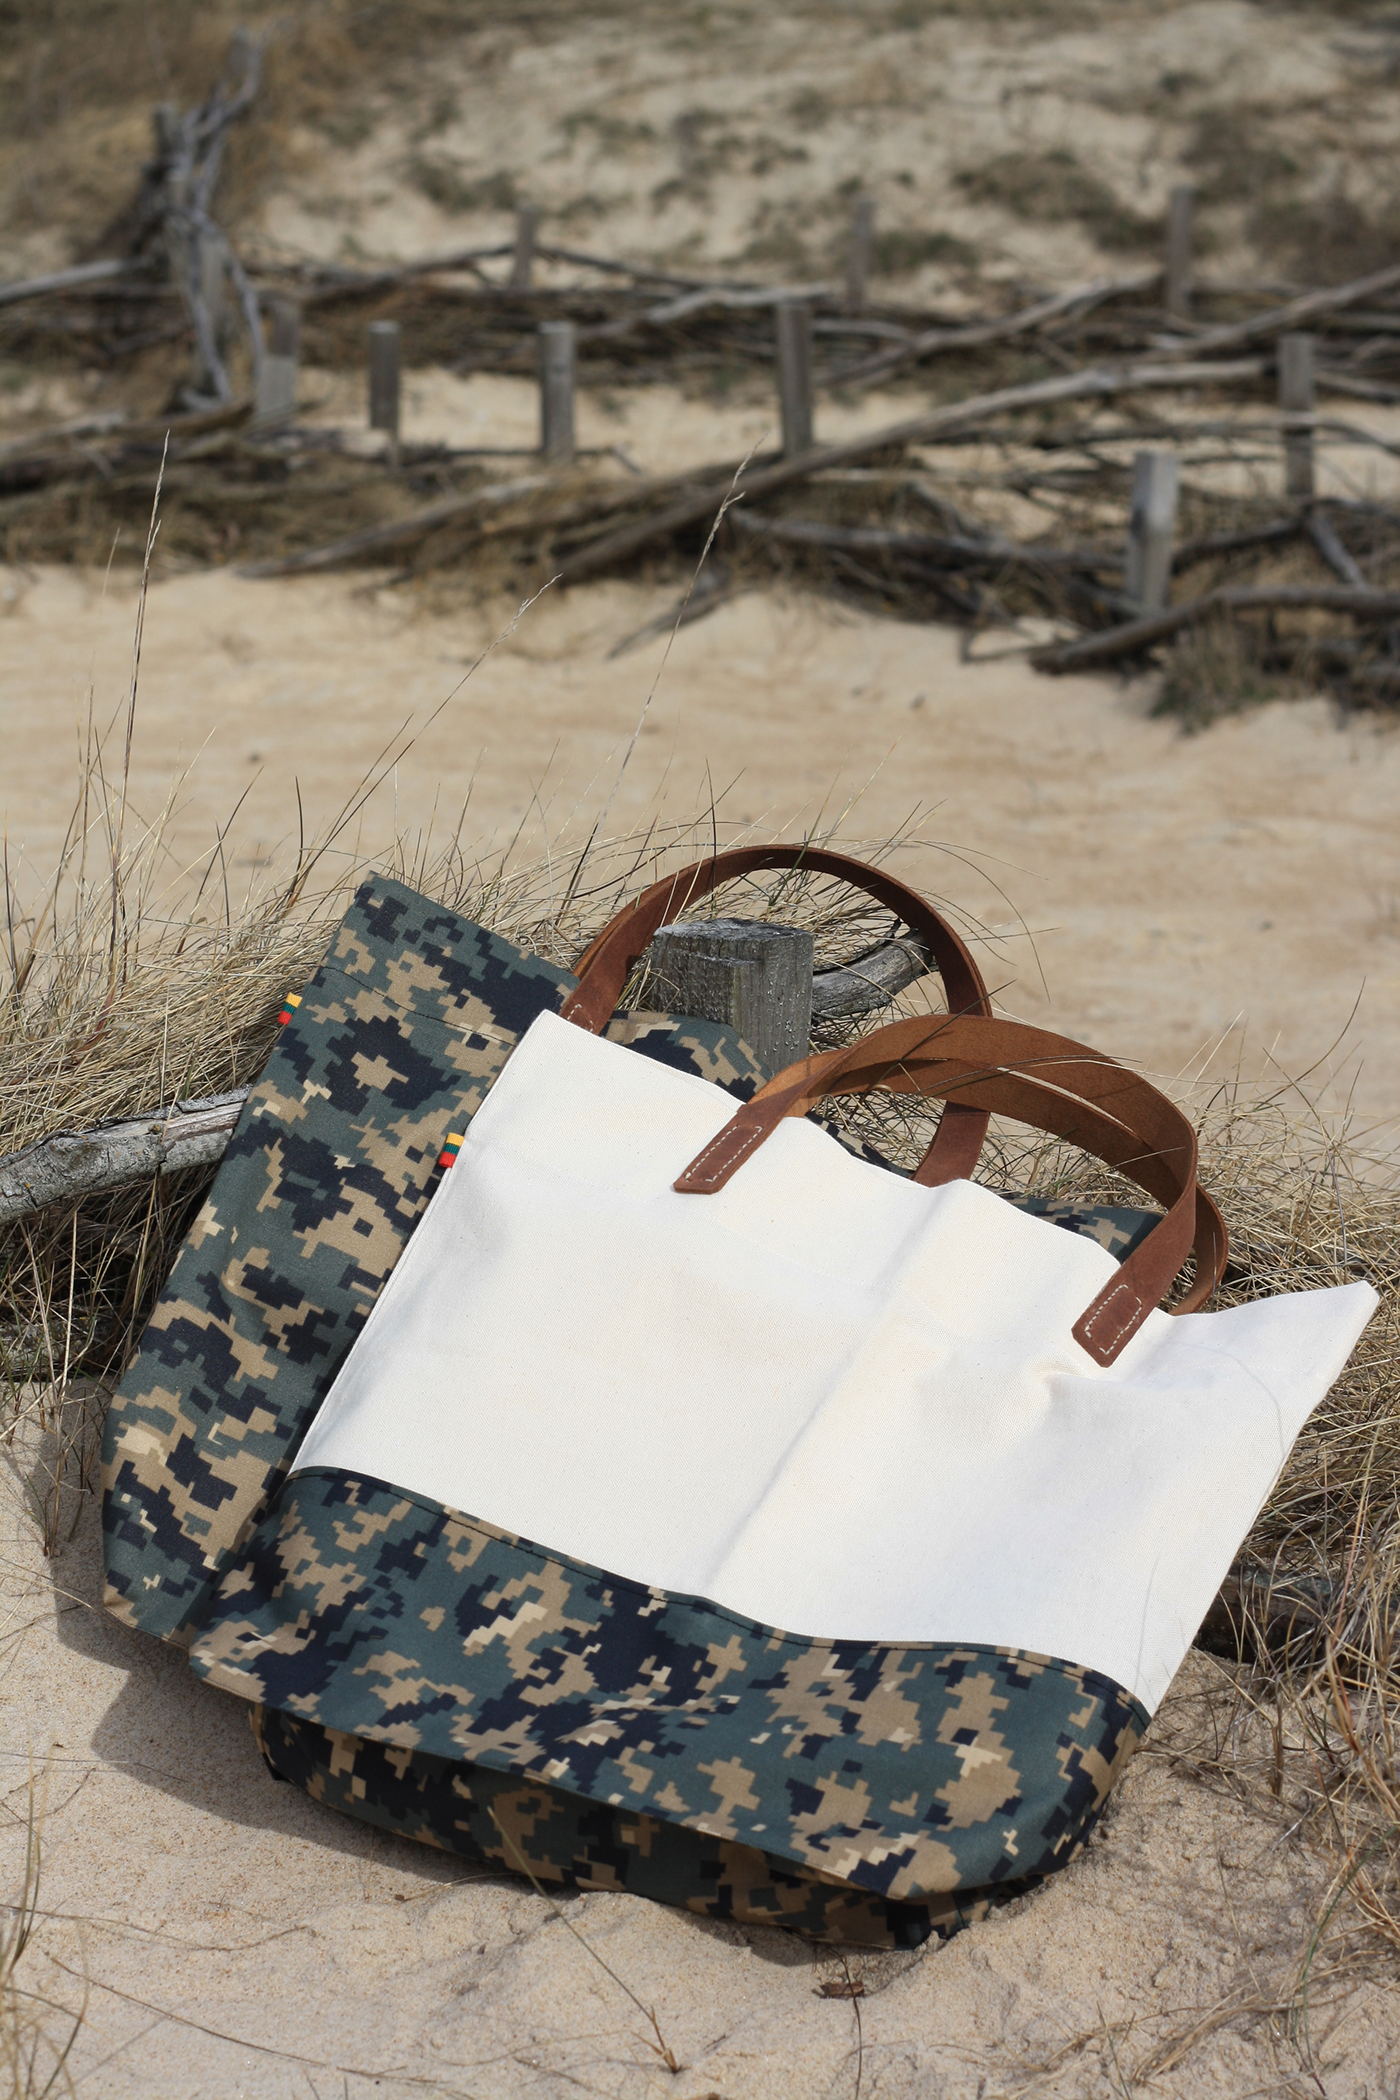 bag totebag camouflage Shopping shoppingbag purse leather rugged mensfashion